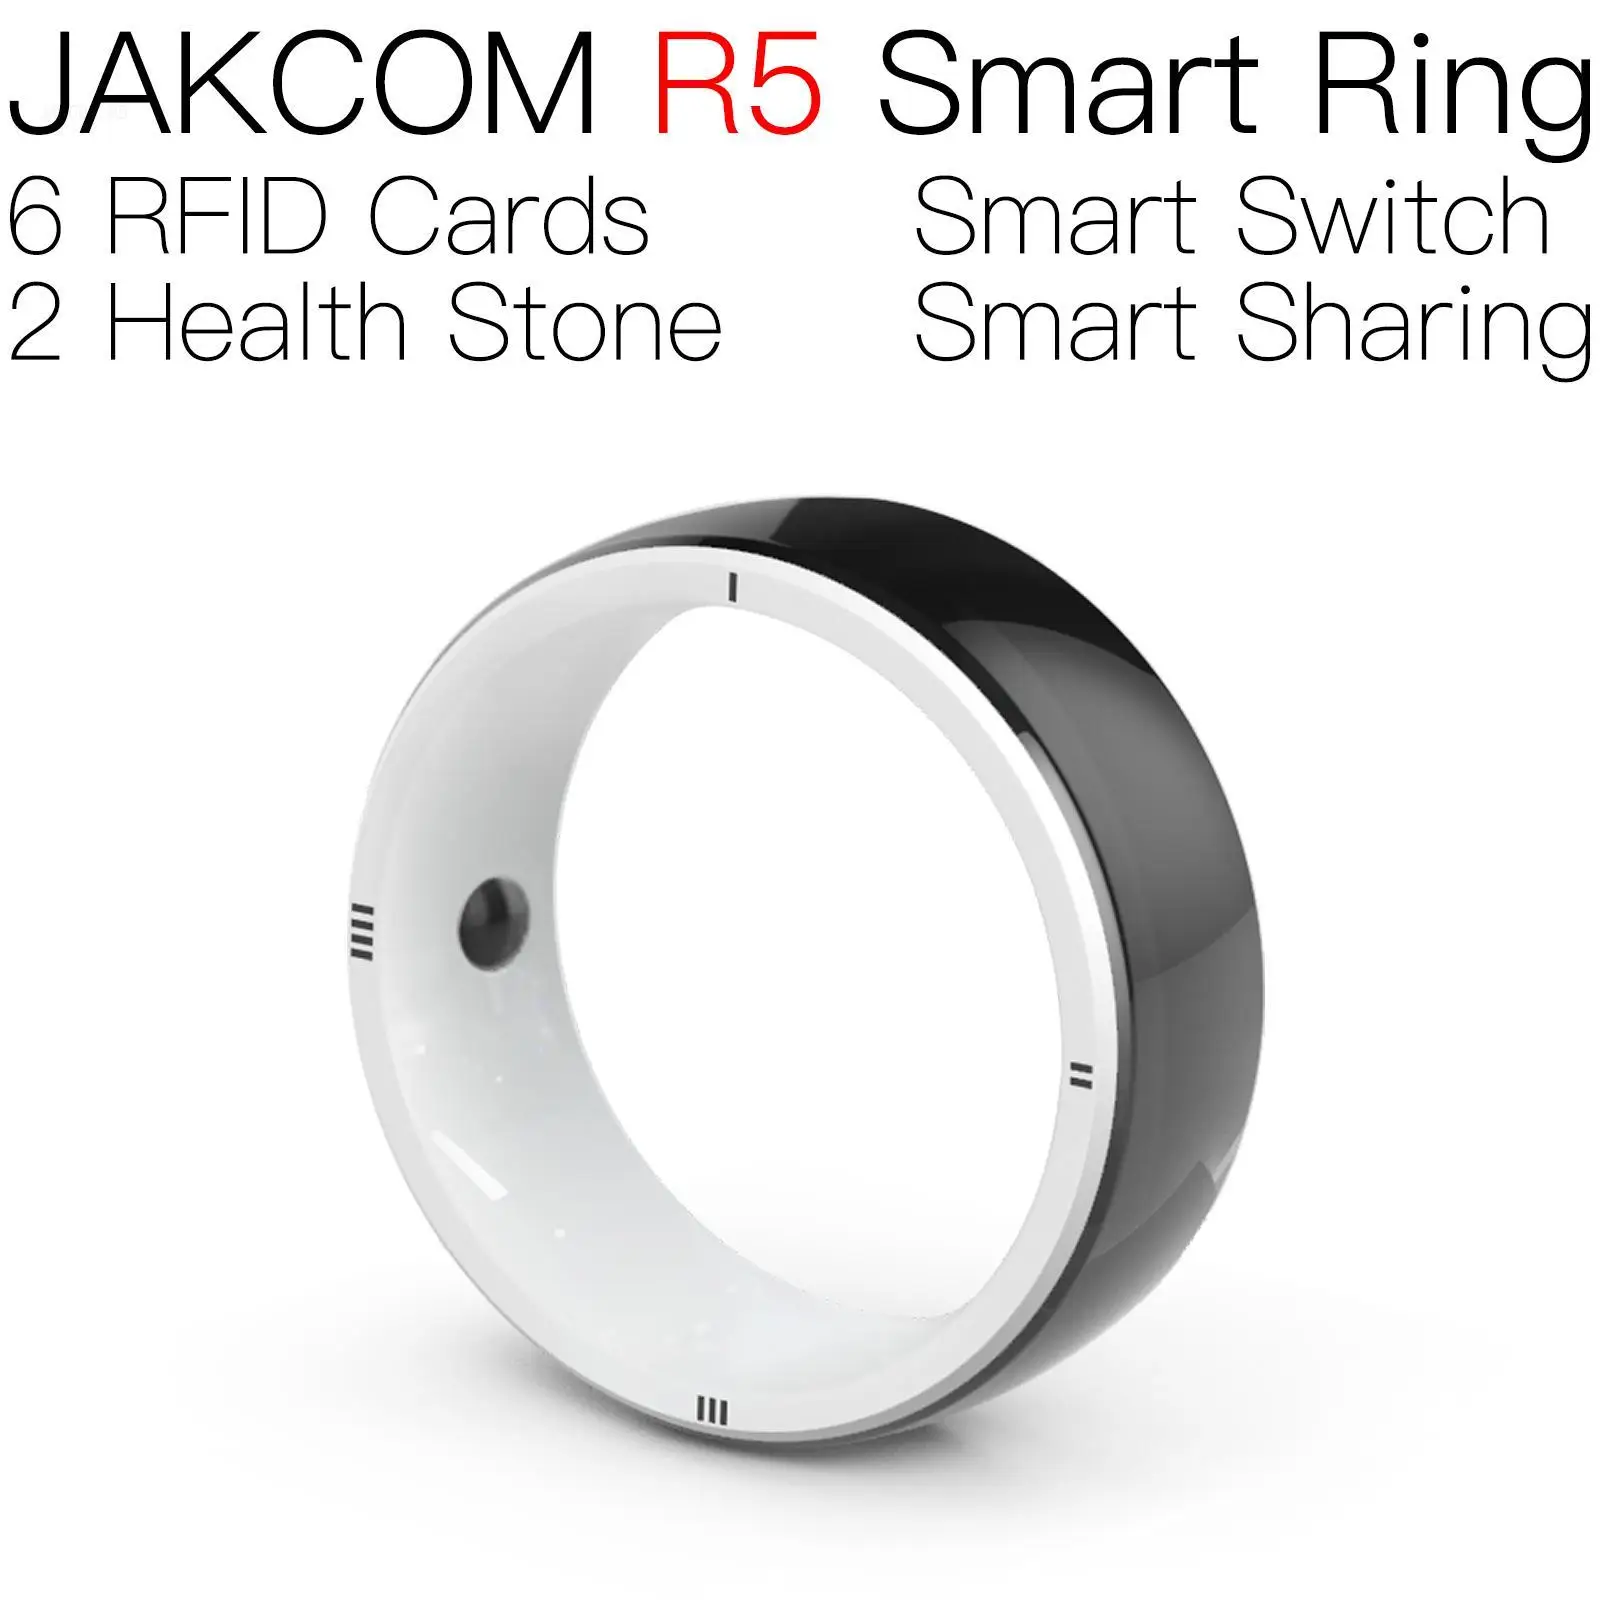 

JAKCOM R5 Smart Ring Nice than card kof joystick 5pcs nfc tag nfc216 label 216 stickers tags badges rfid ceramic asic